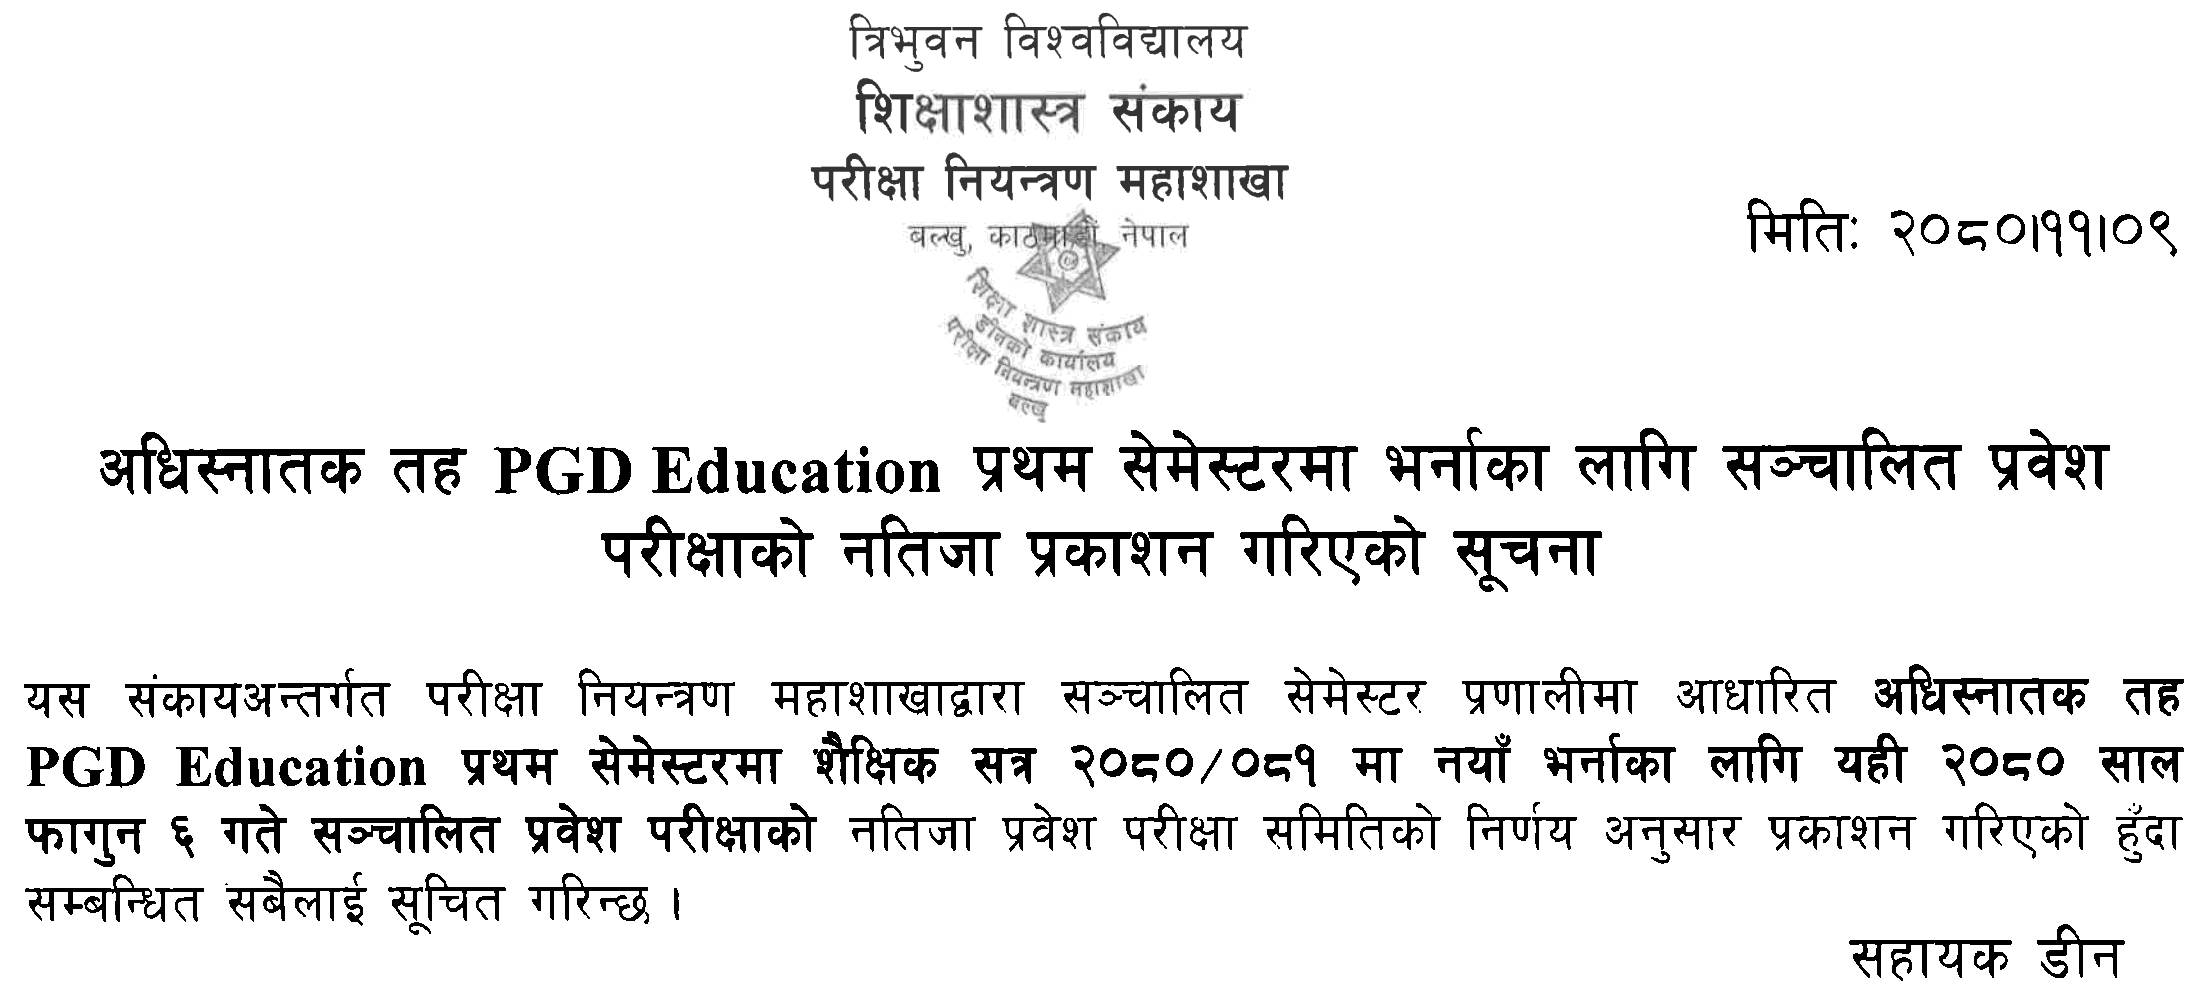 Tribhuvan University Announces PGD Education Entrance Results 2080